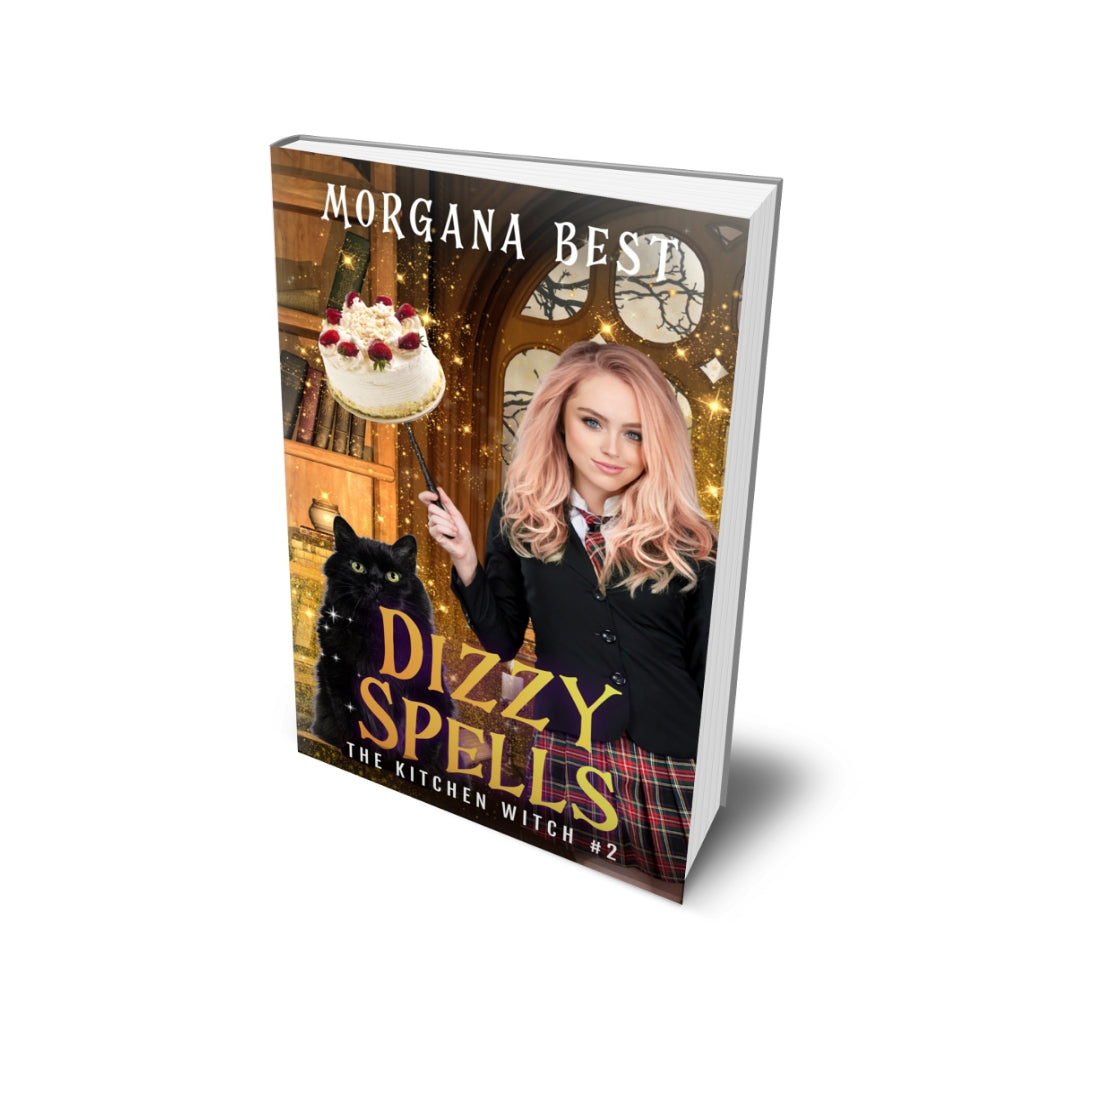 Dizzy Spells cozy mystery paperback morgana best